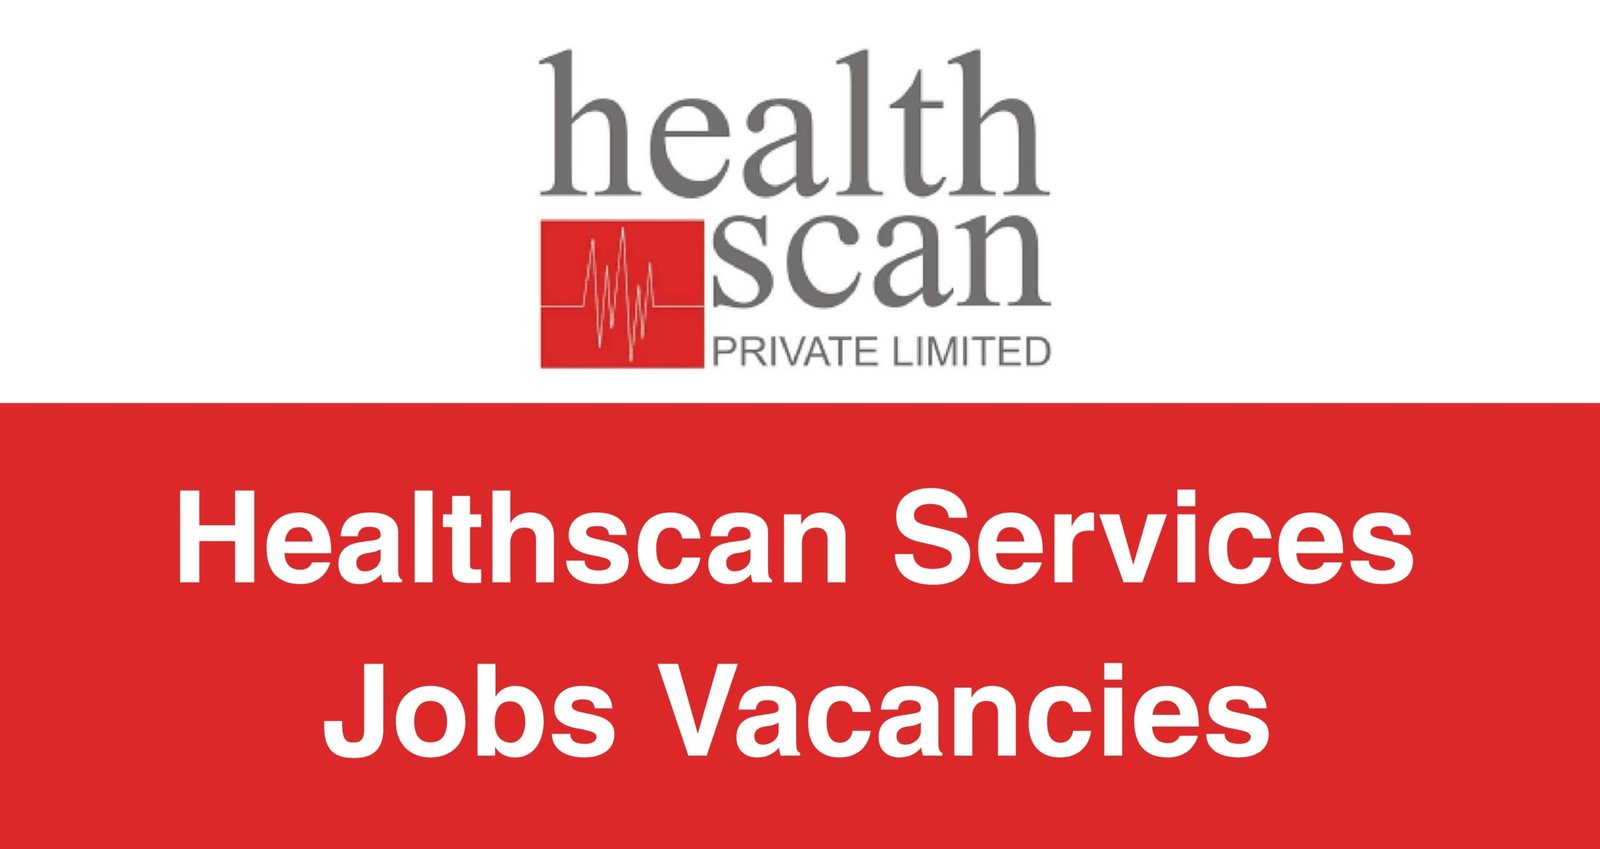 Healthscan Services Jobs Vacancies